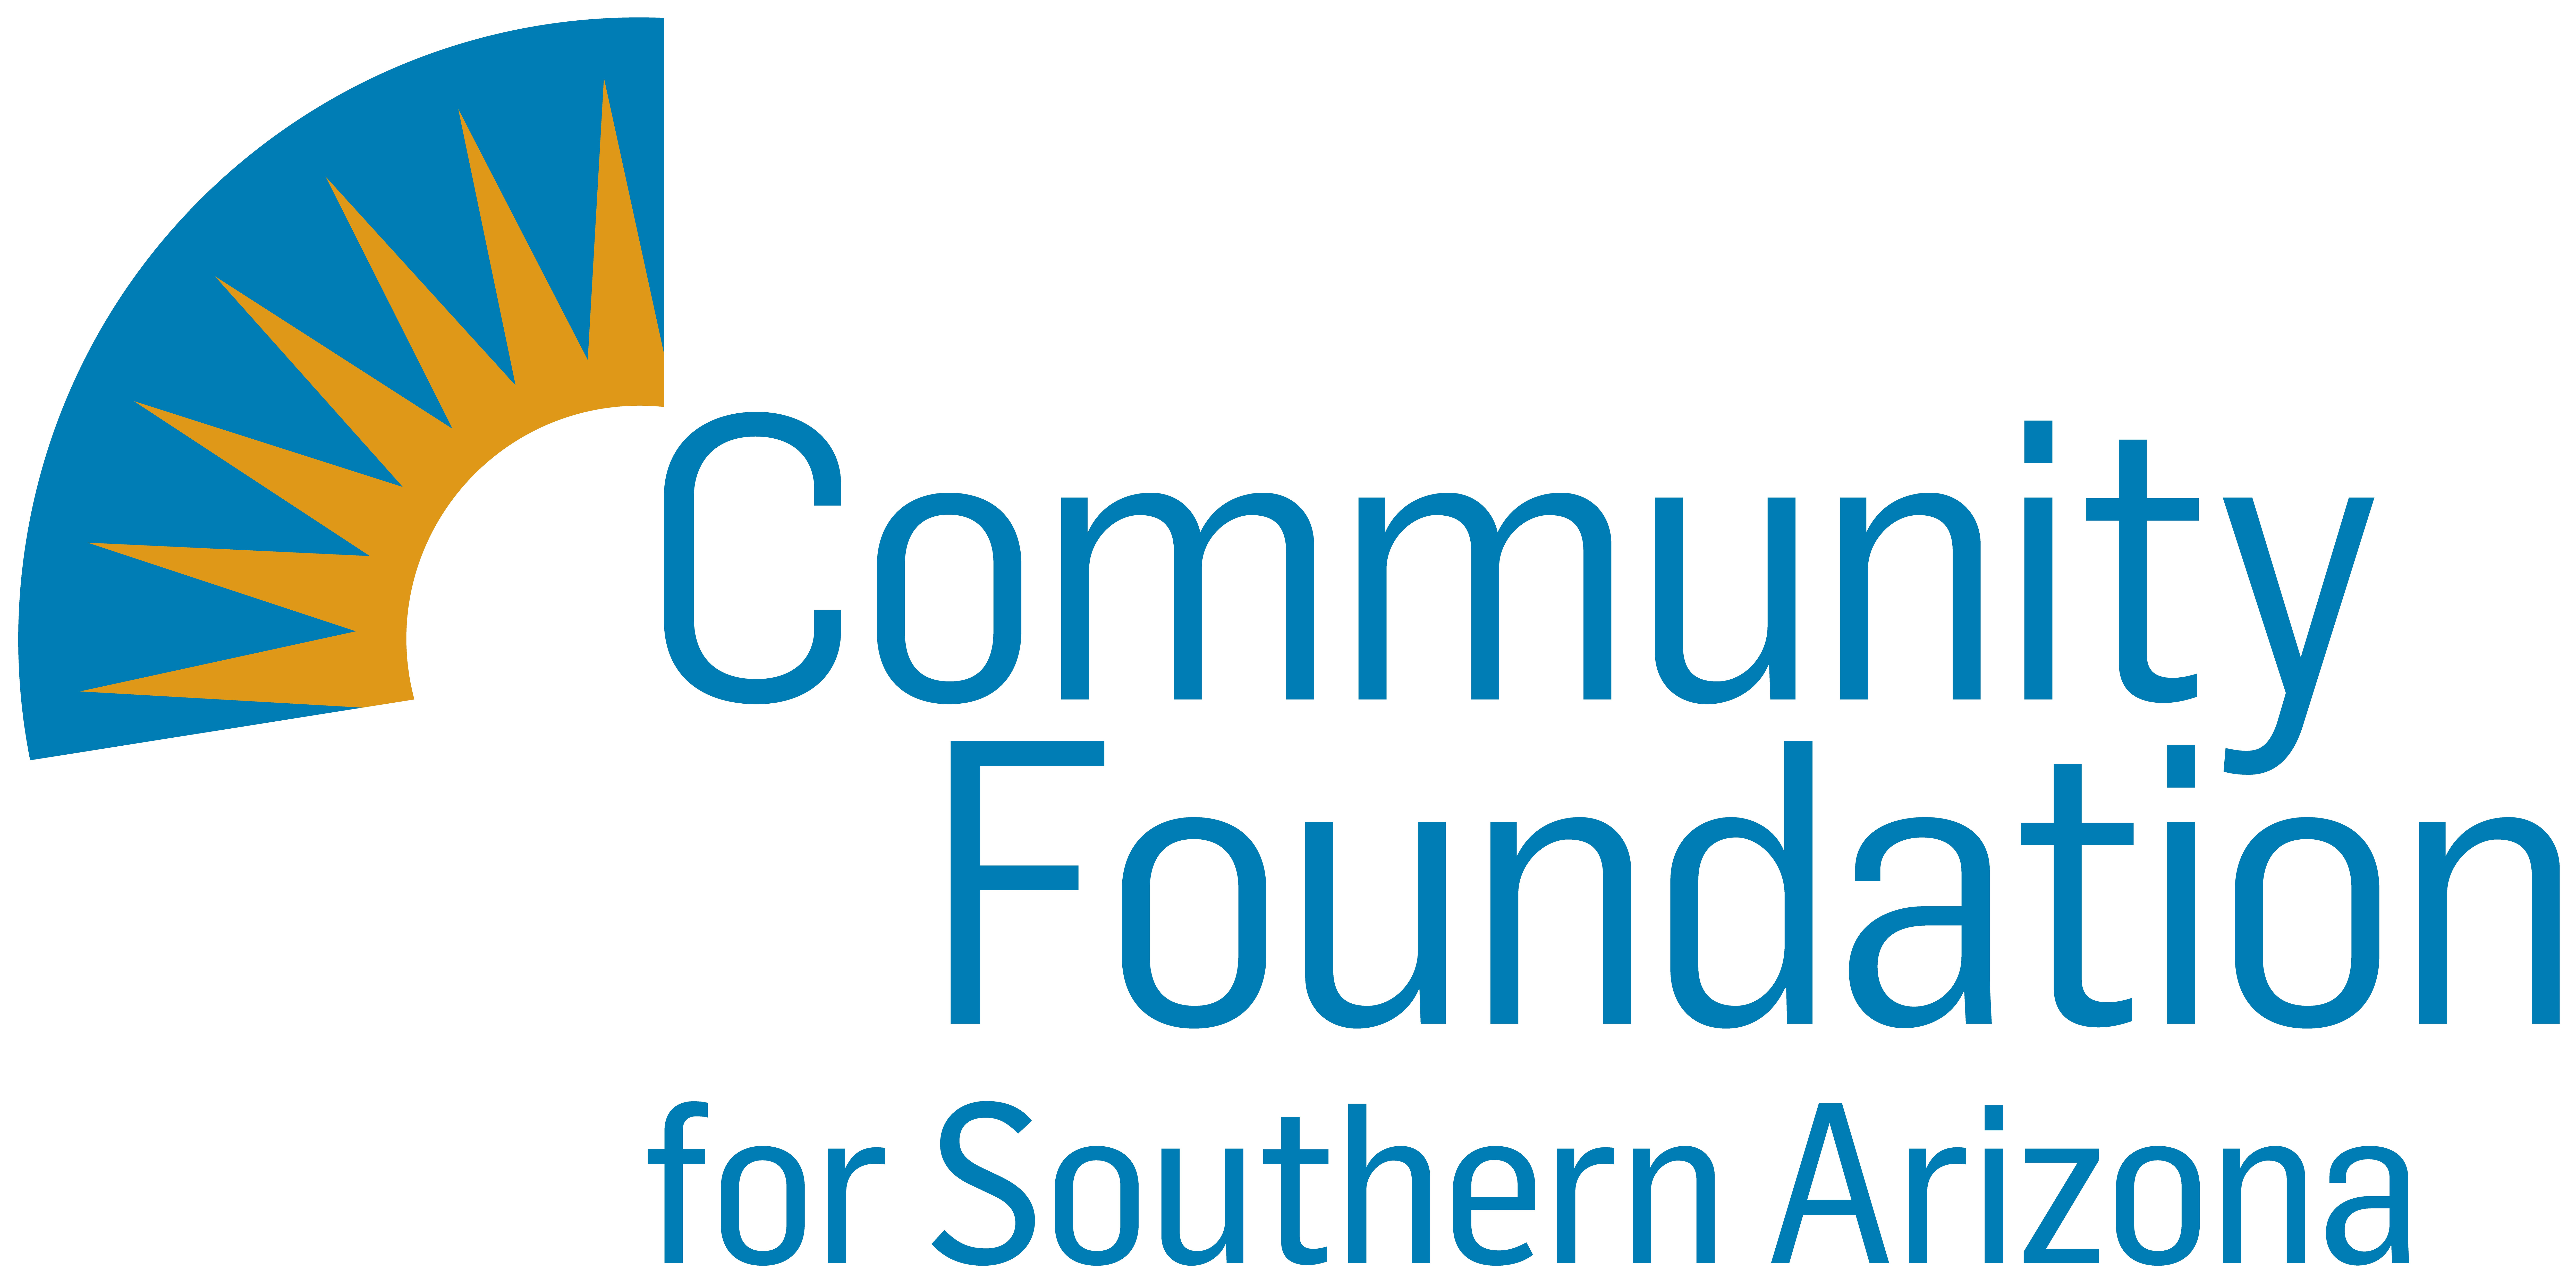 Community Foundation for Southern Arizona